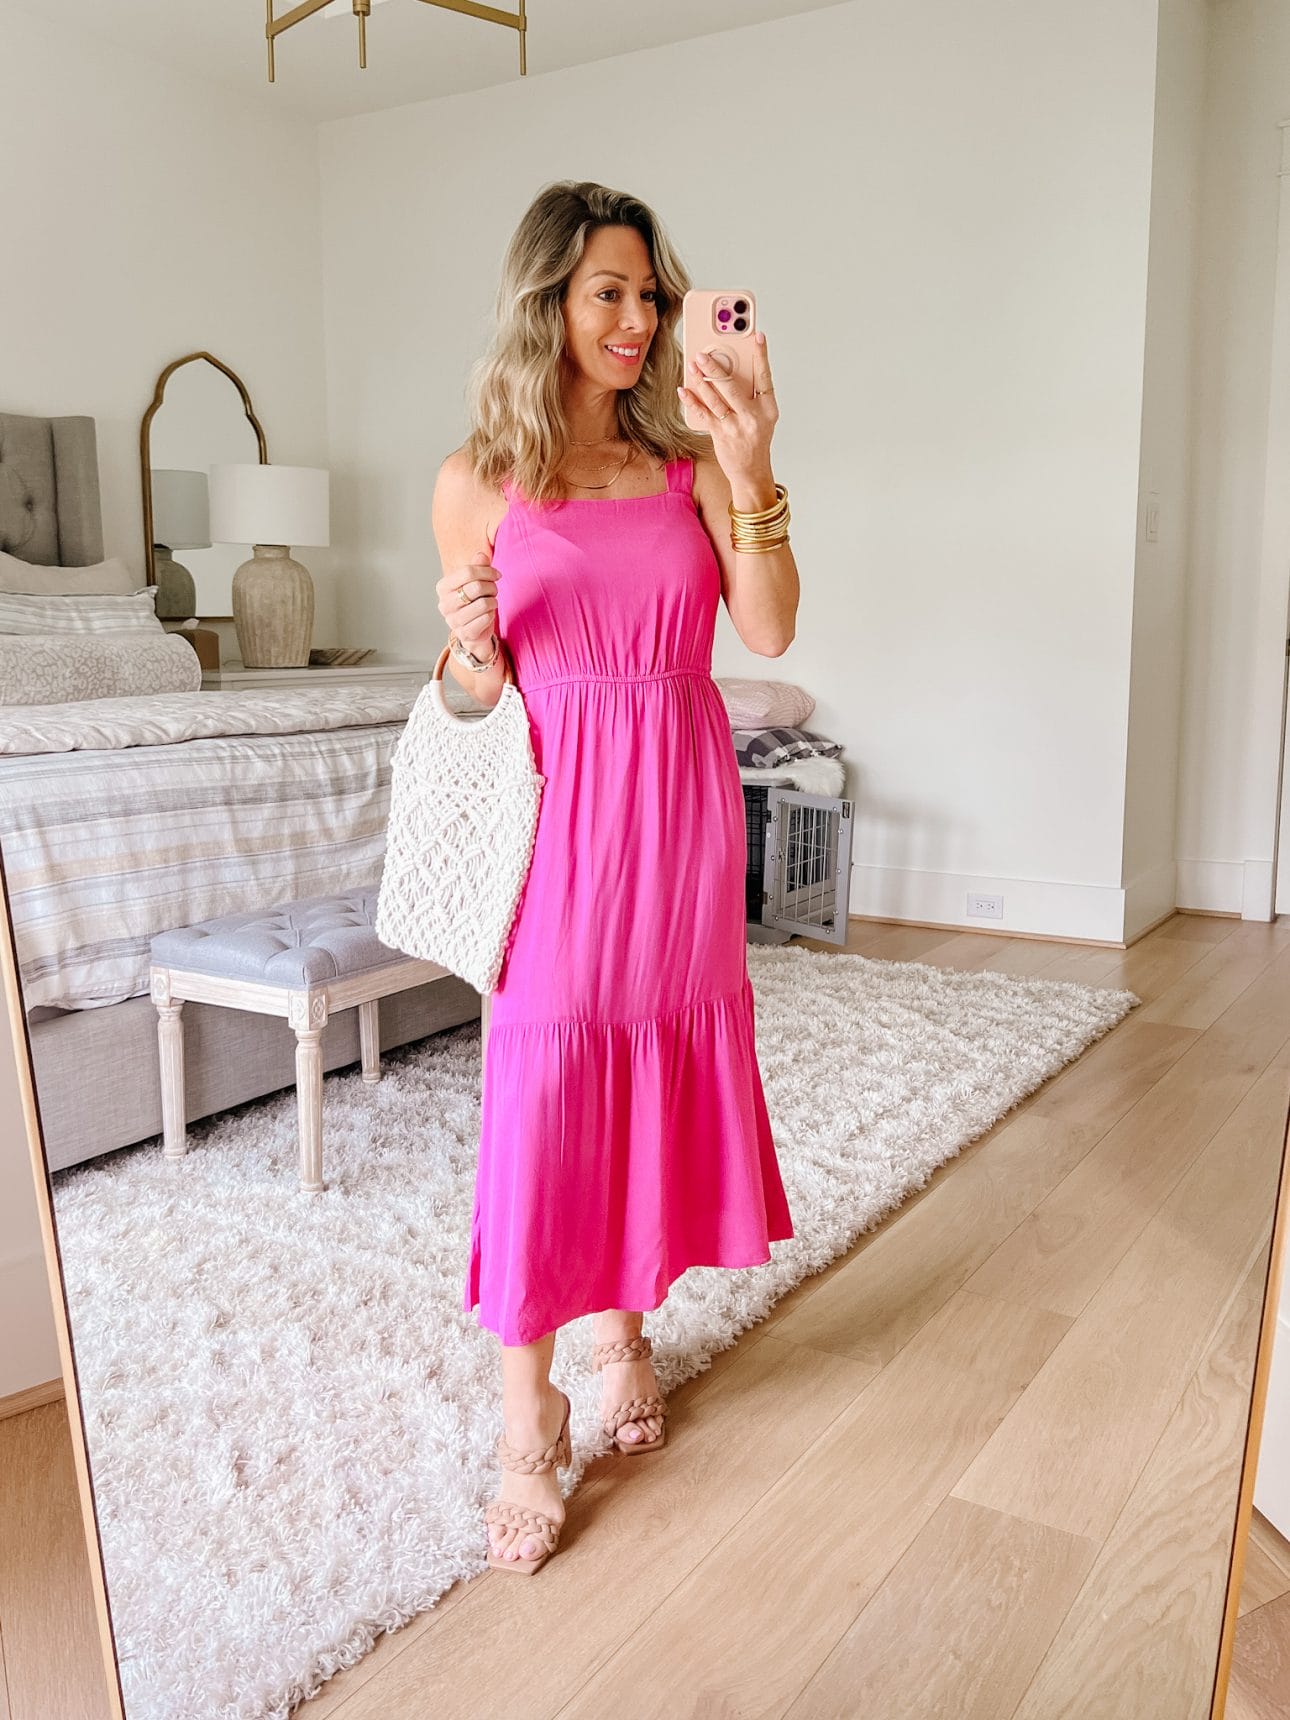 Pink Dress Maxi Style, Braided Heels, Crochet Bag 